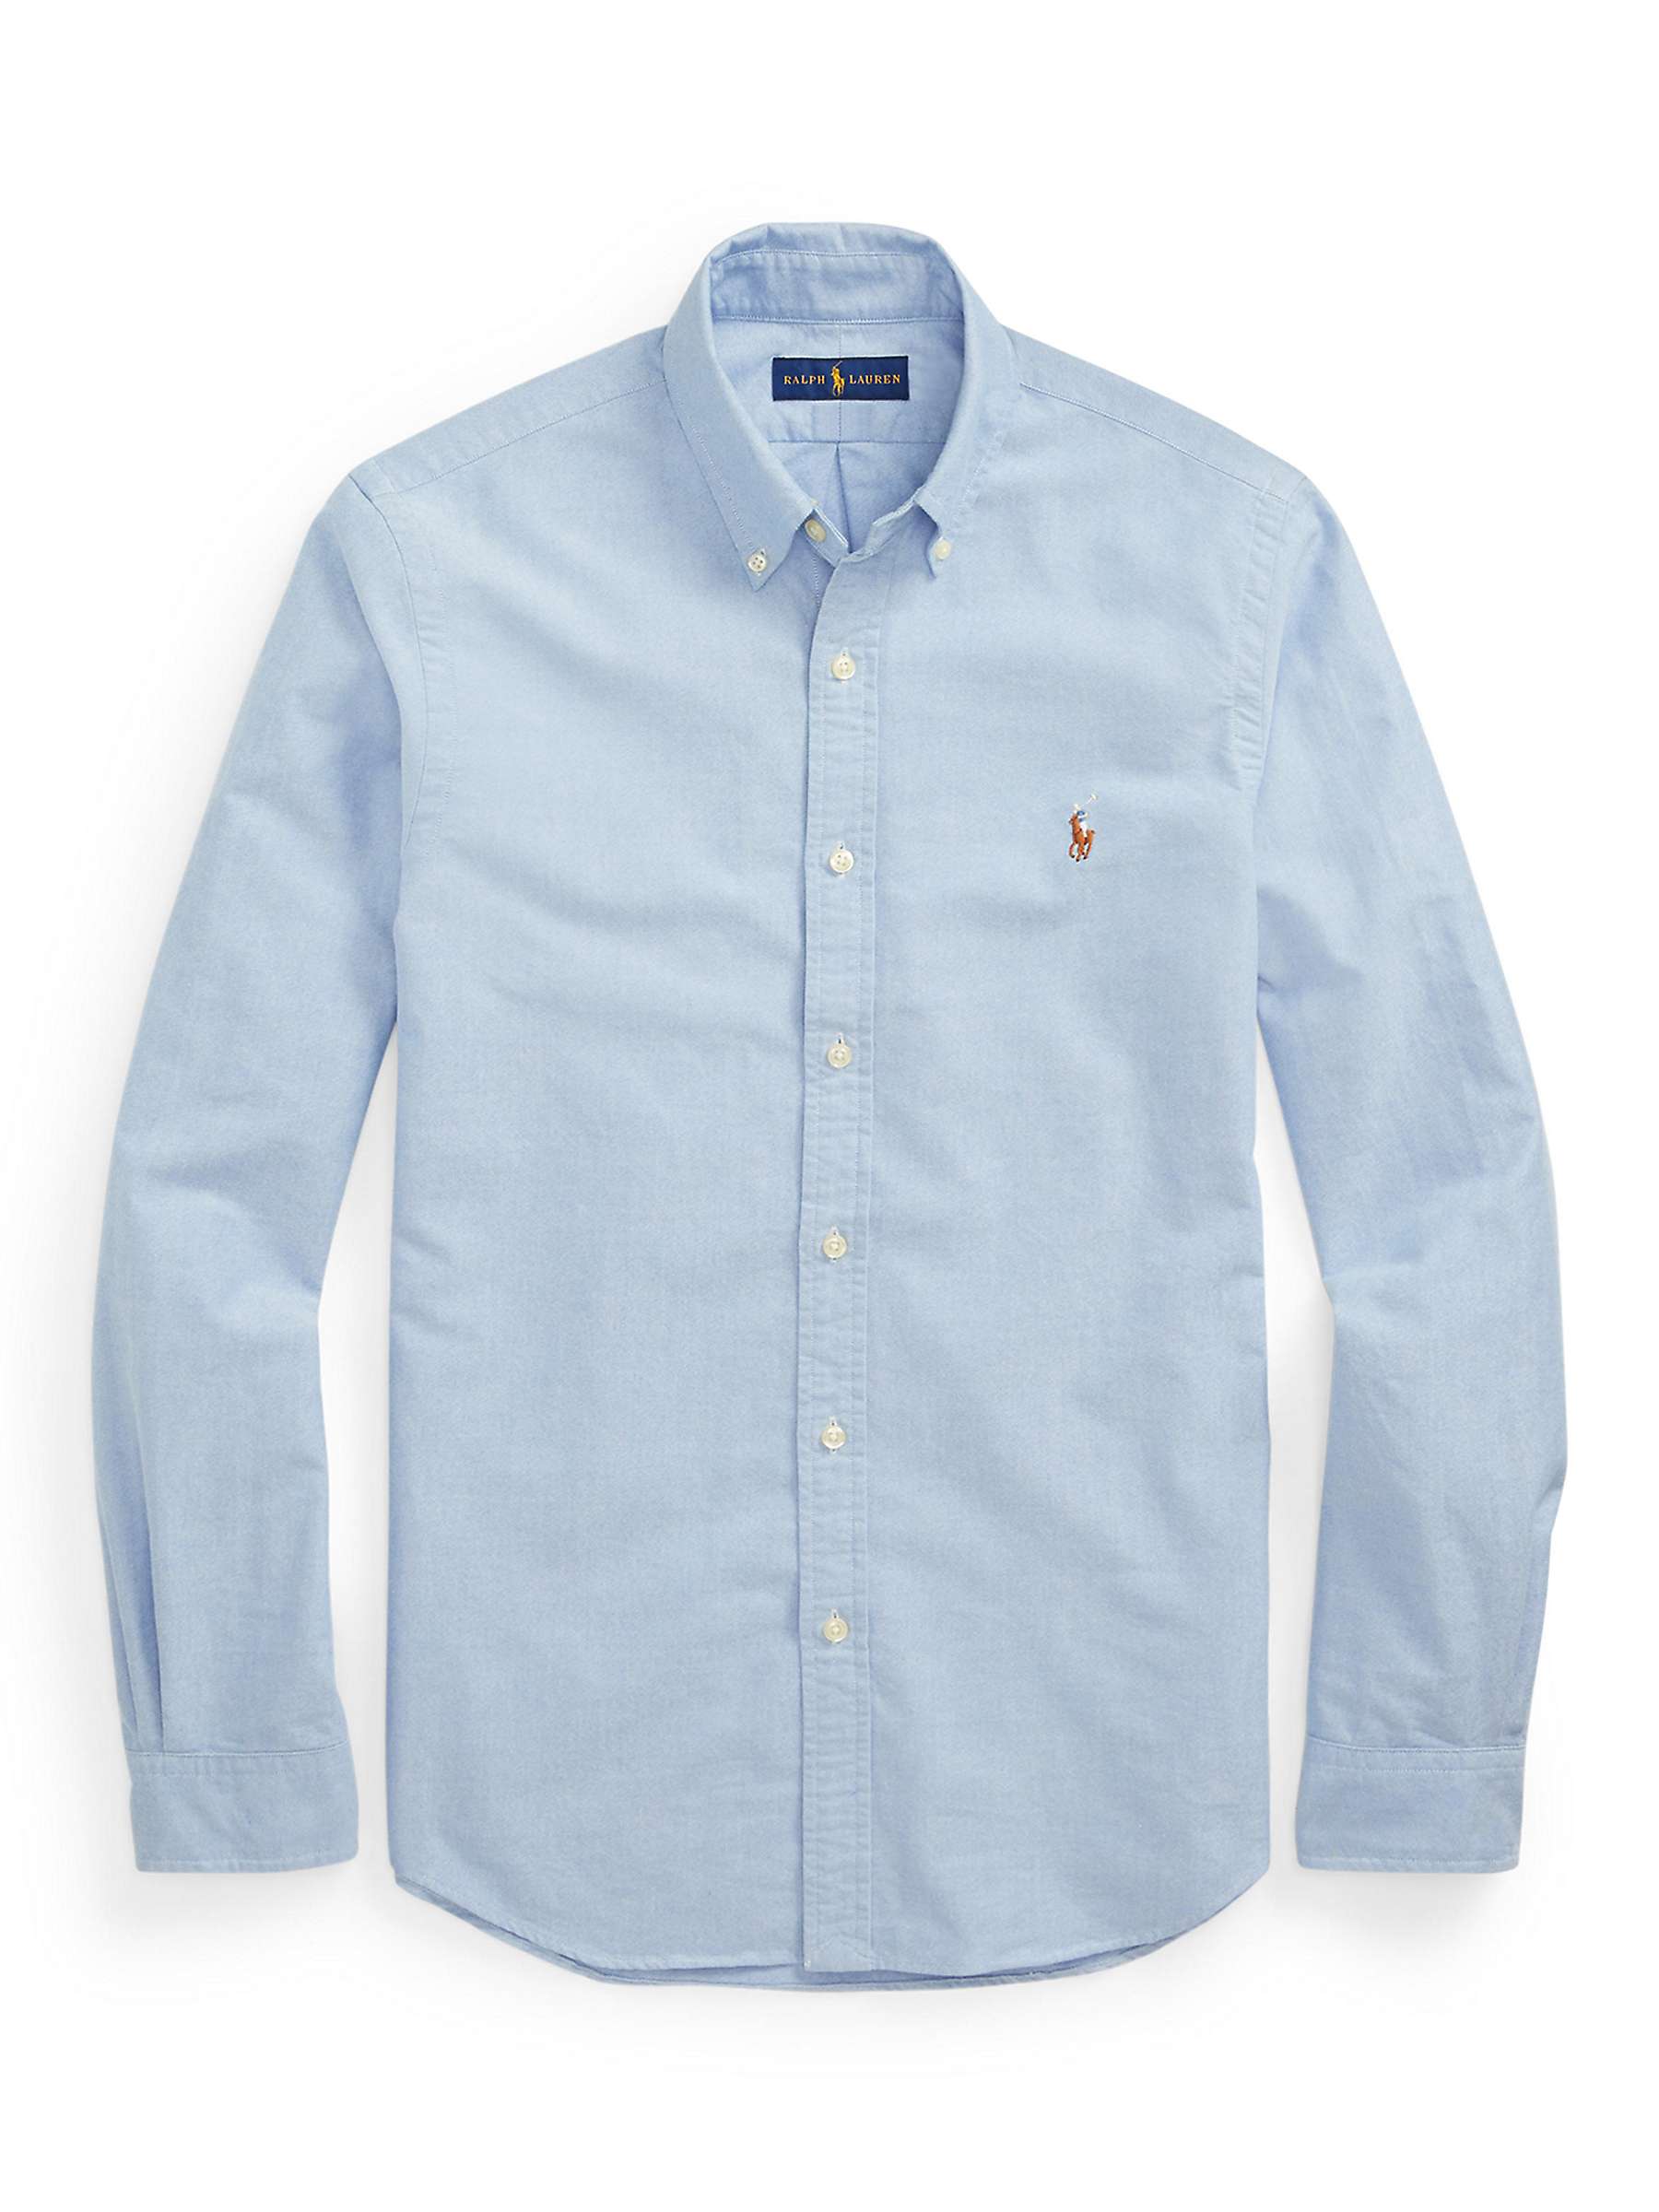 Buy Polo Ralph Lauren Slim Fit Oxford Shirt Online at johnlewis.com